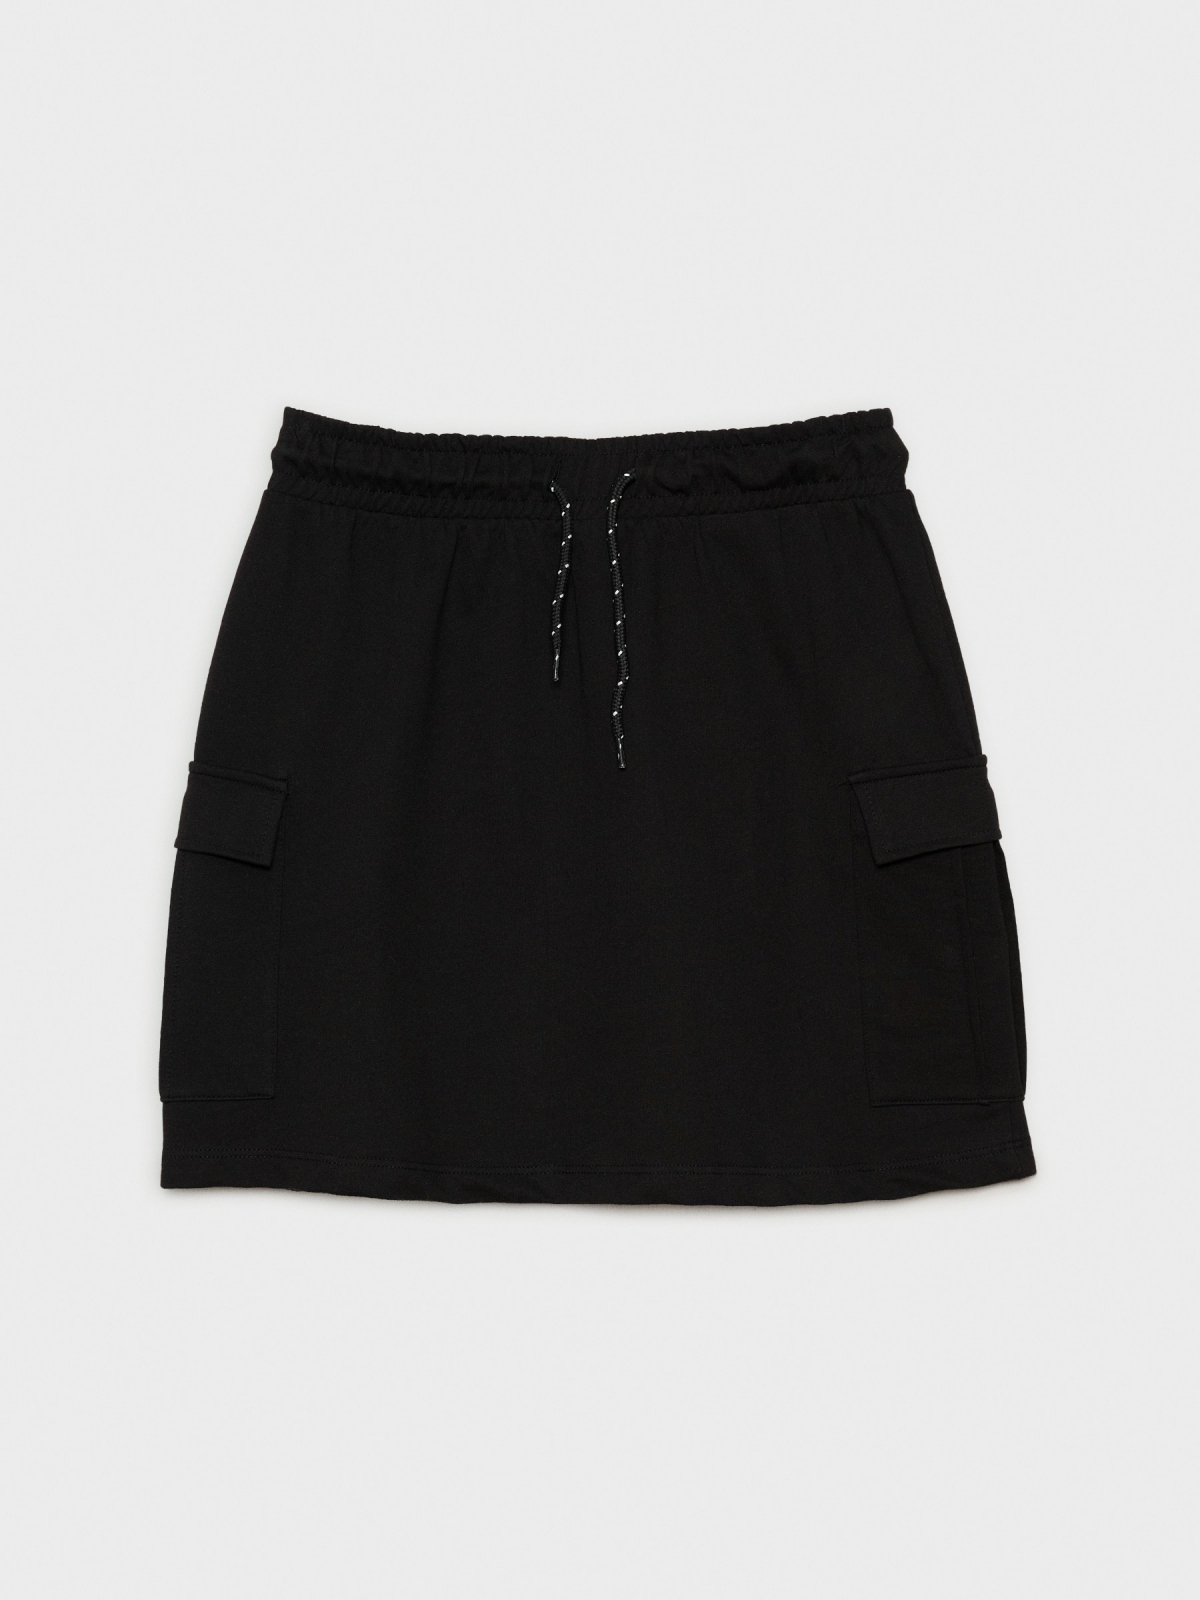  Adjustable cargo skirt black